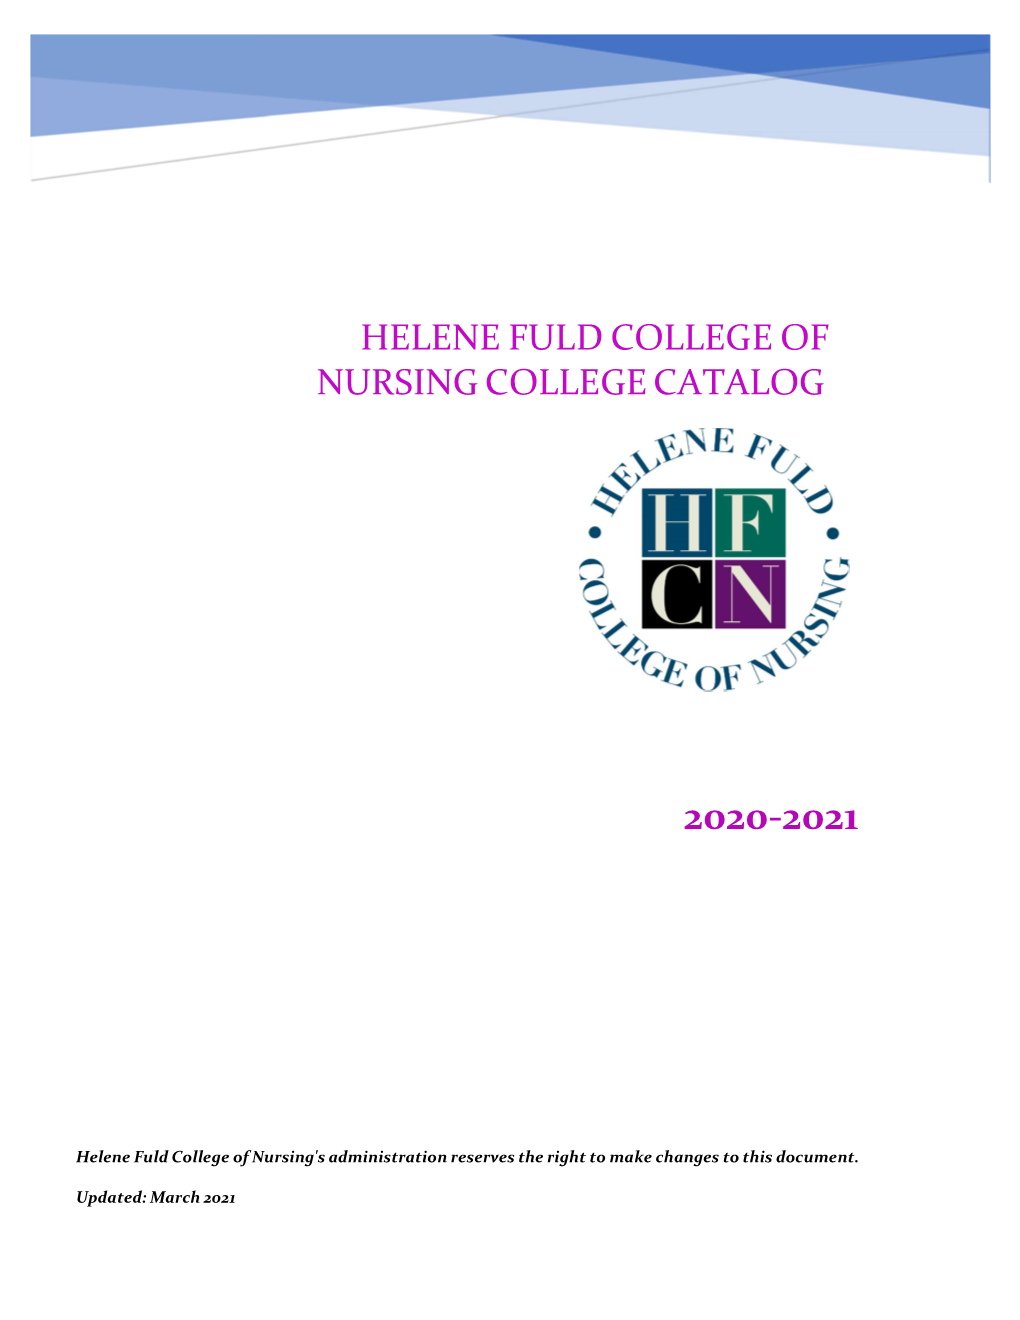 Helene Fuld College of Nursing College Catalog